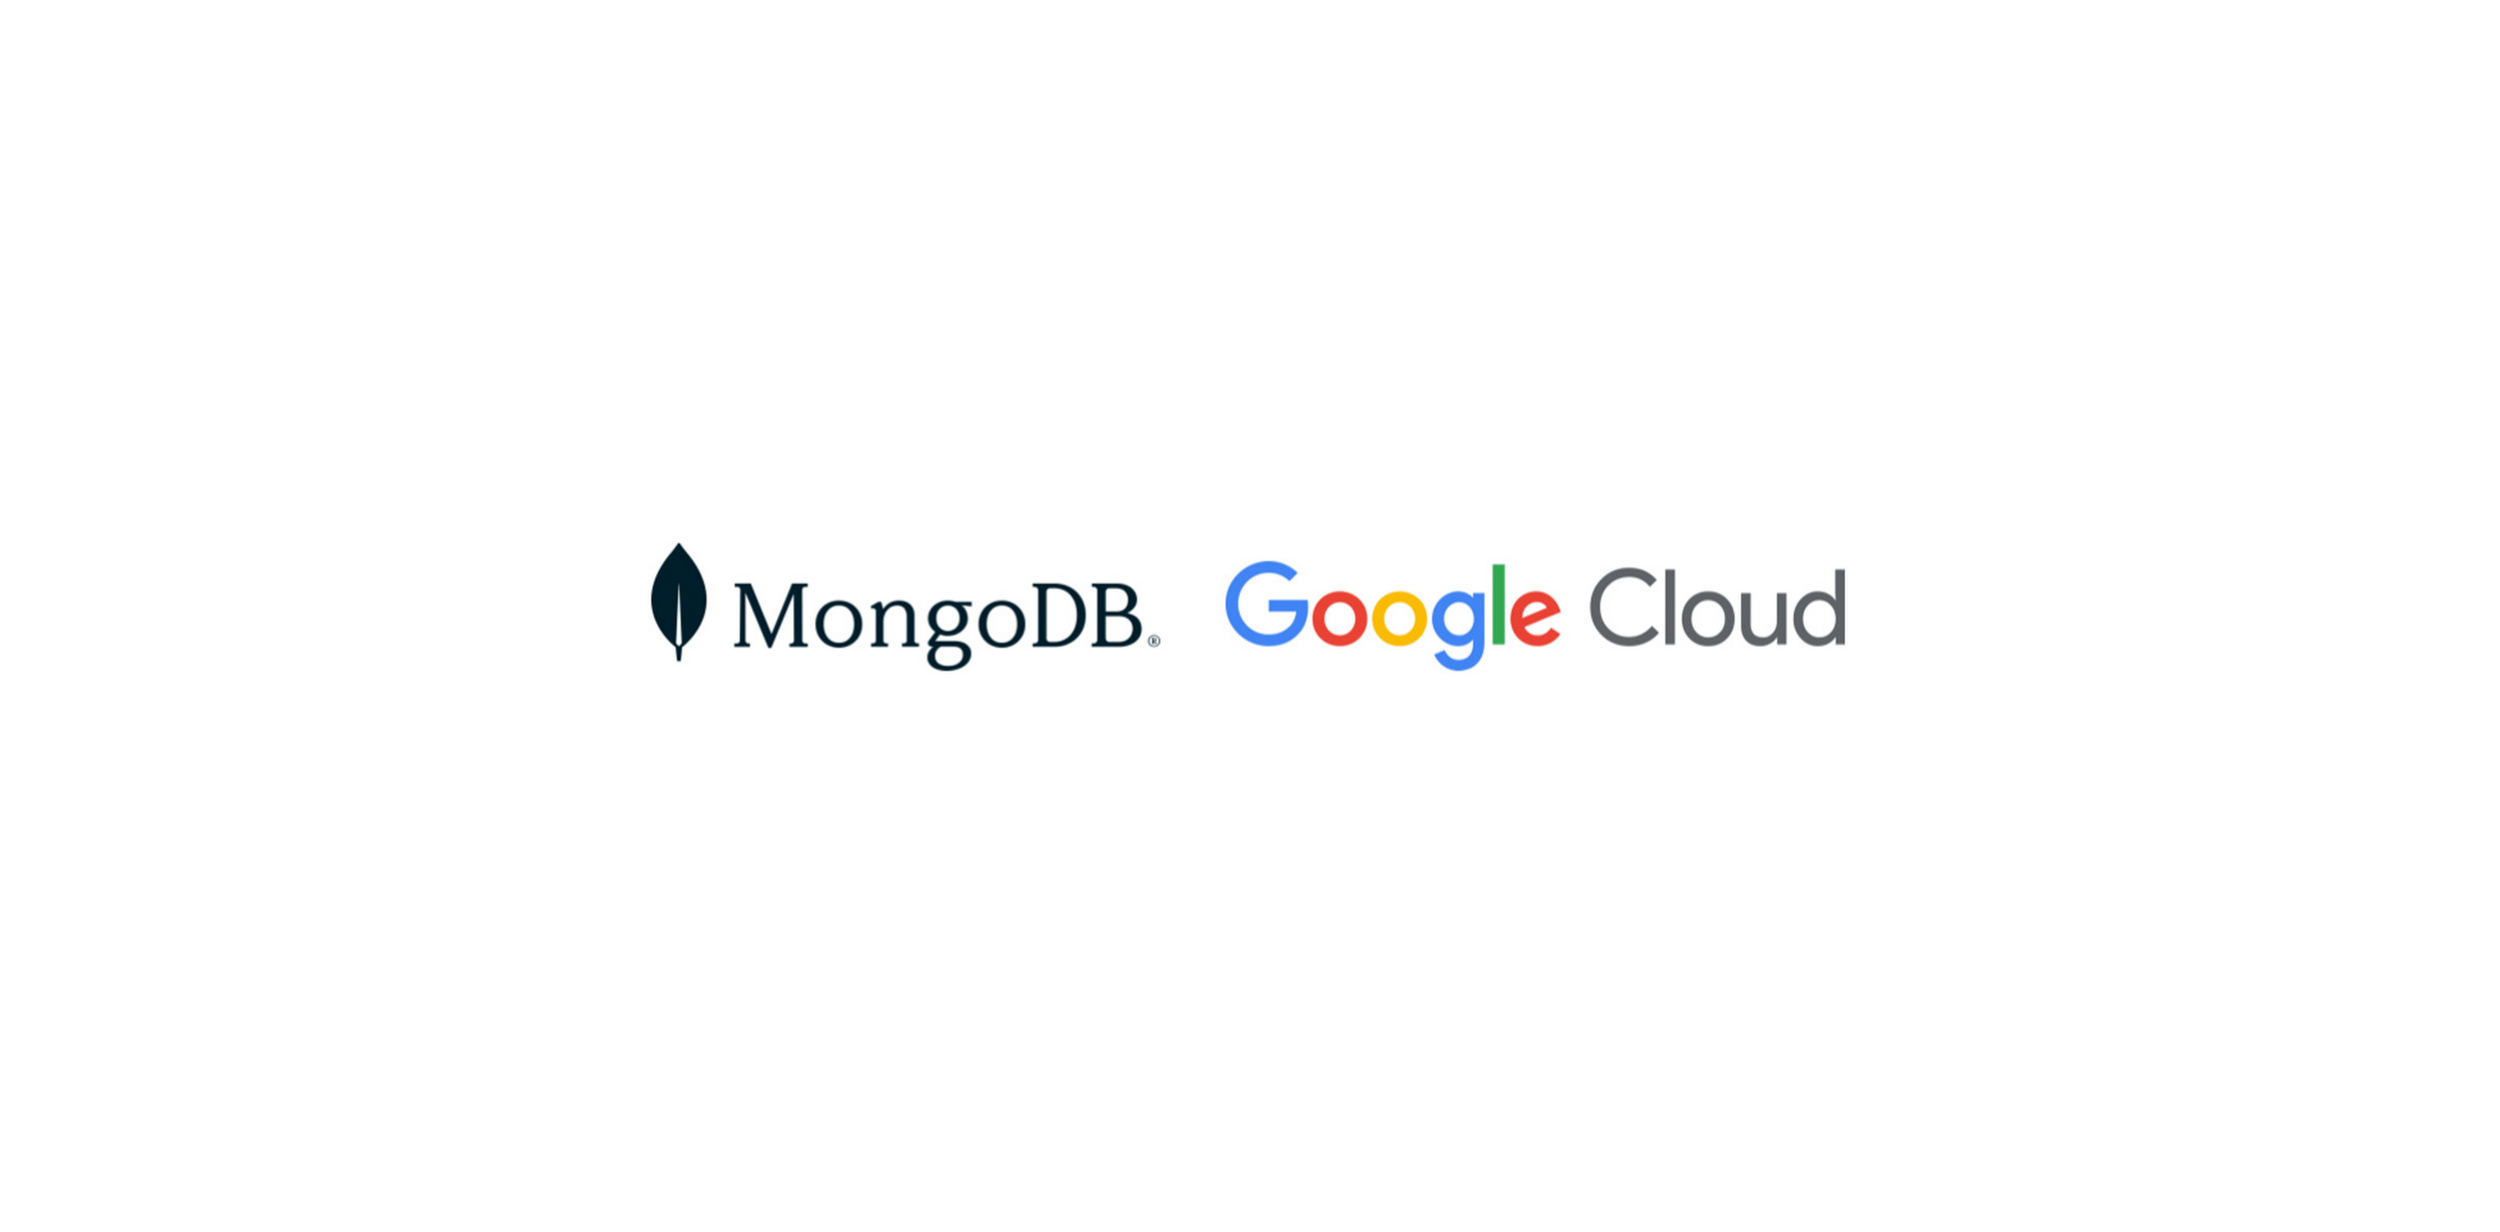 https://storage.googleapis.com/gweb-cloudblog-publish/images/mongoDB.max-2500x2500.jpg